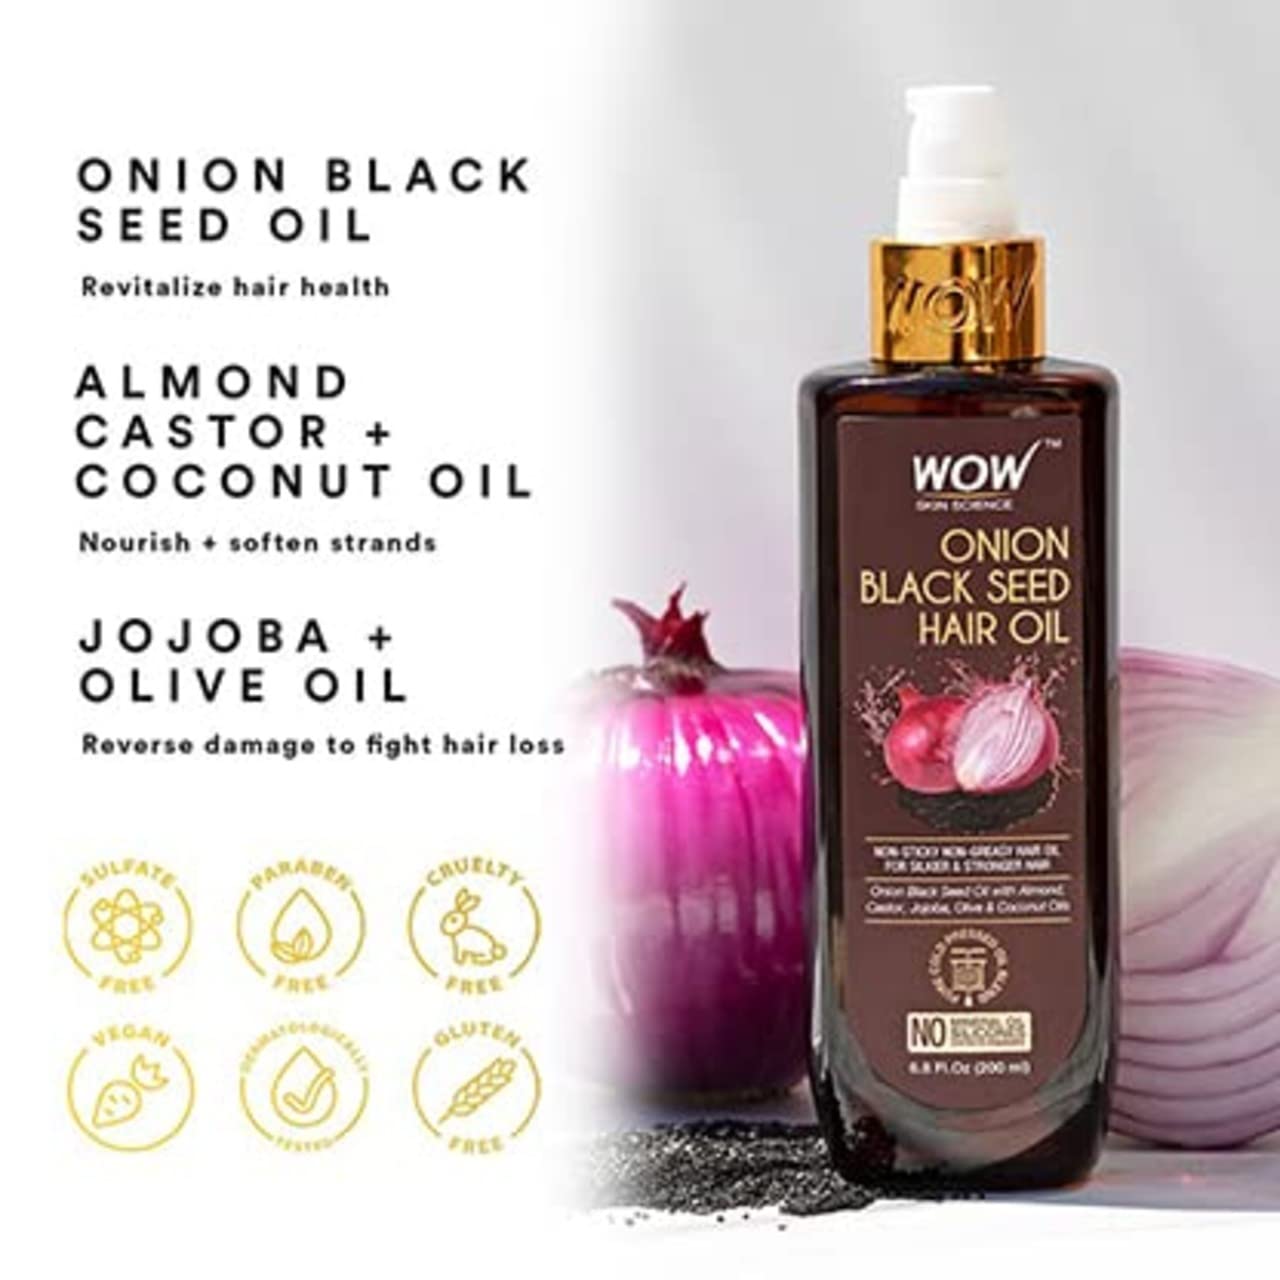 Buy WOW Skin Science Onion Black Seed Hair Oil 200ml online at best price  in India  Health  Glow